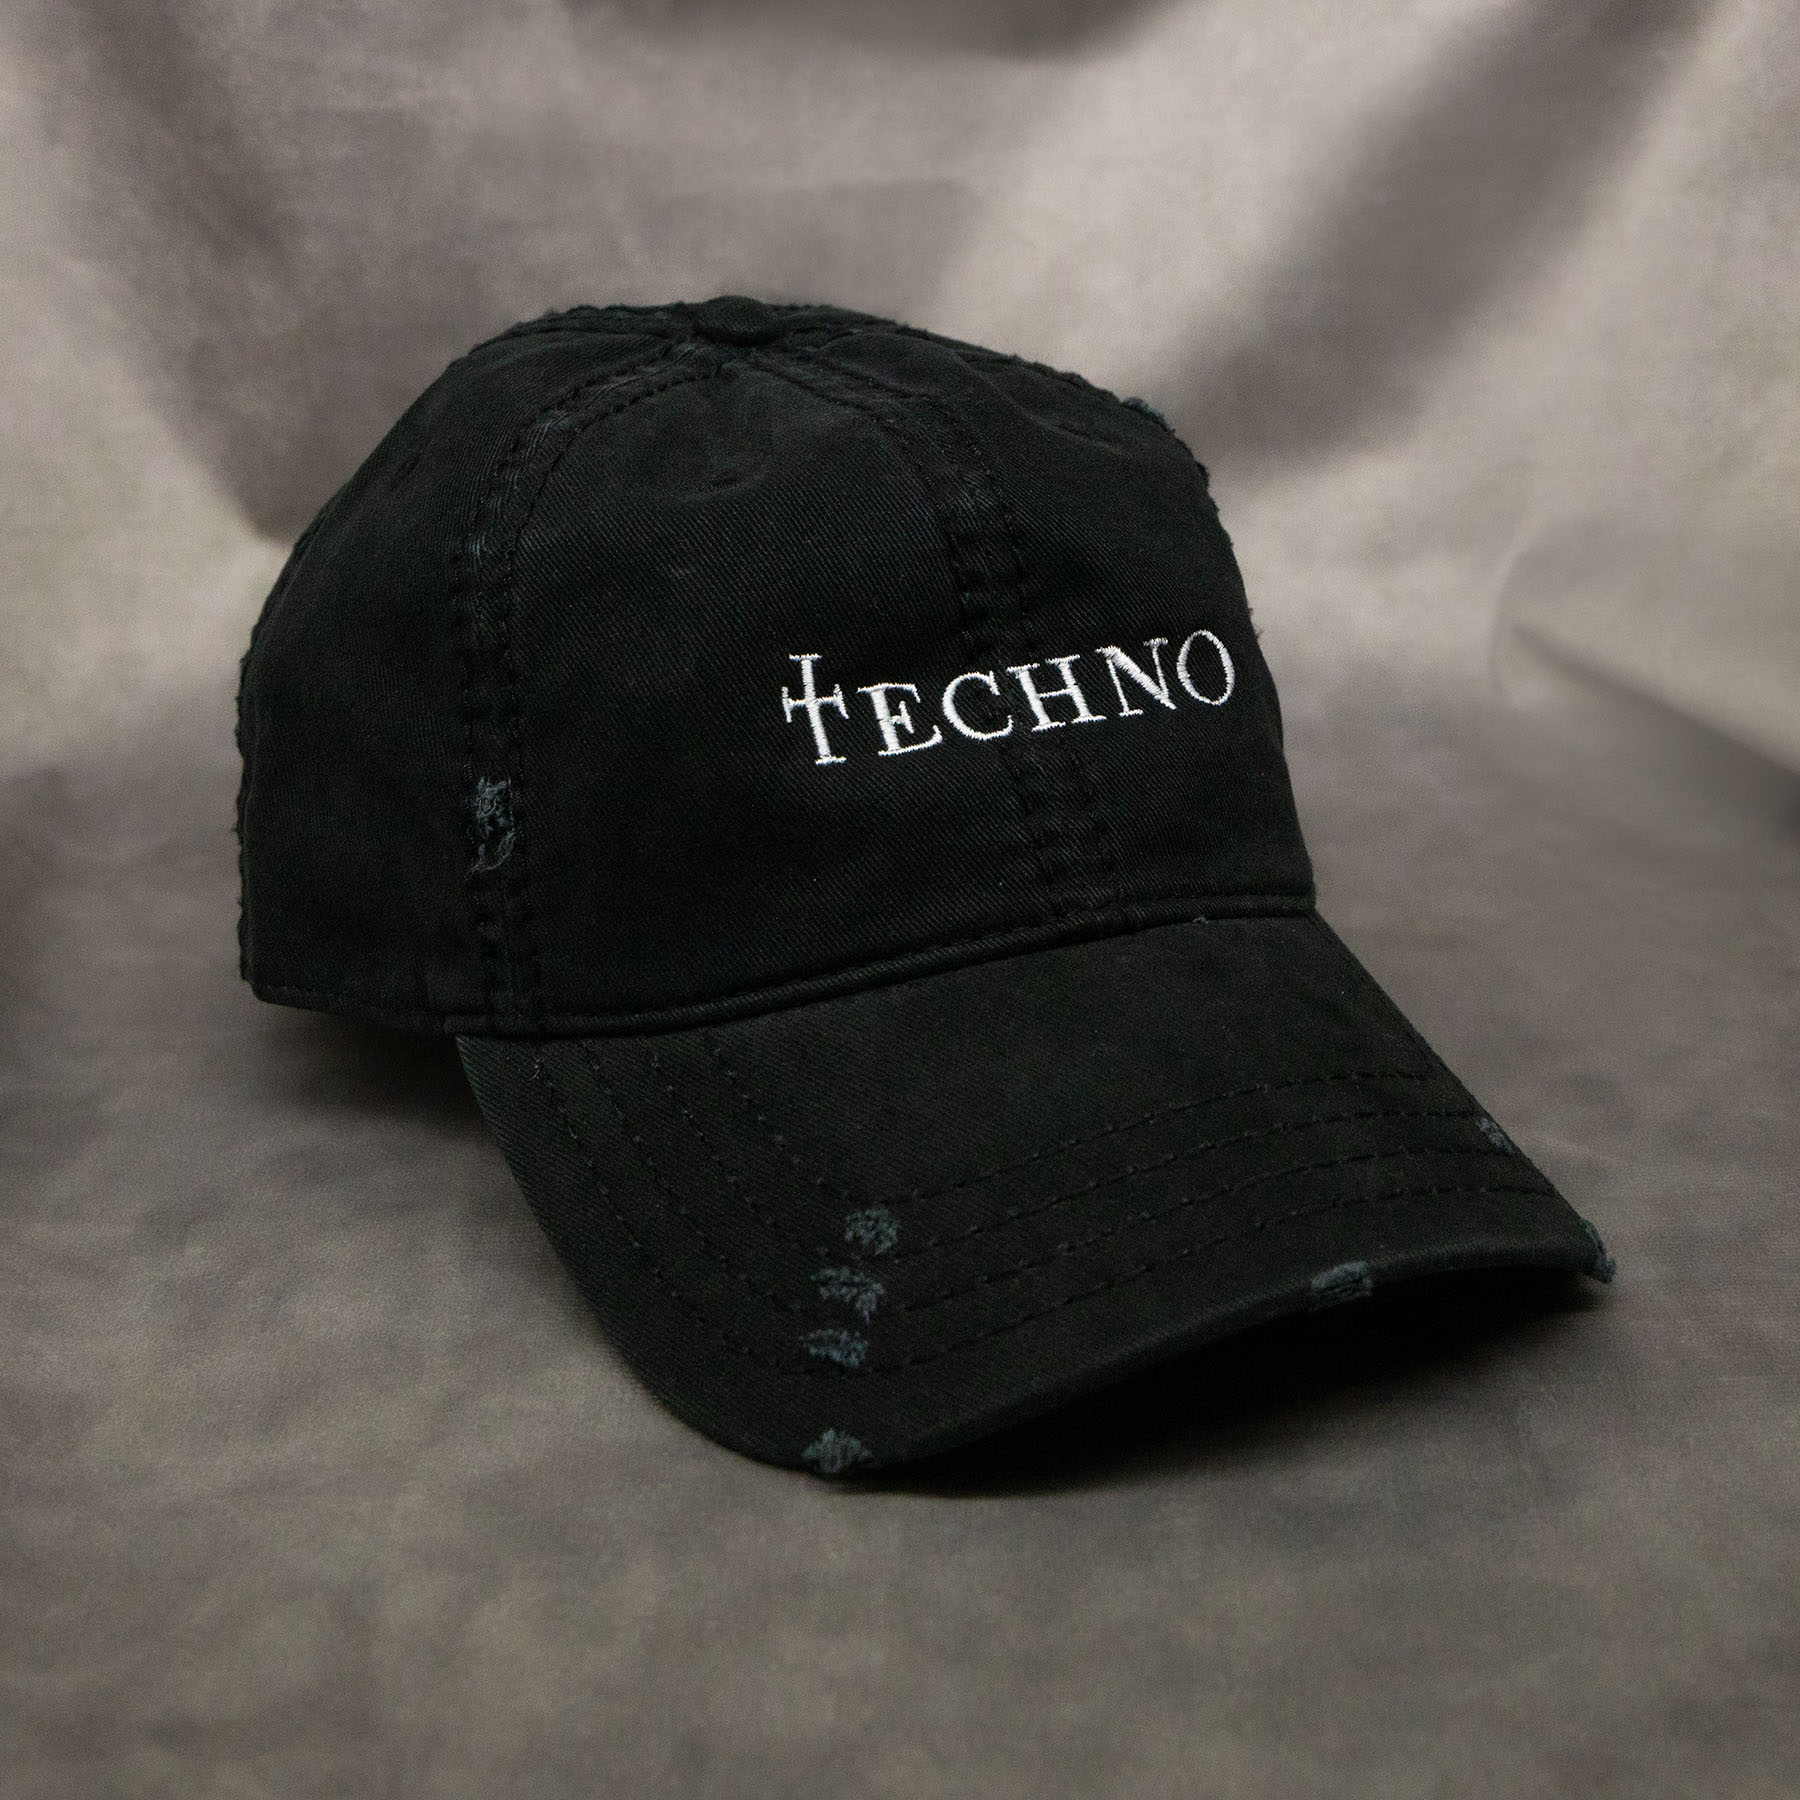 Techno Distressed Dad Hat - IKendoit.Shop